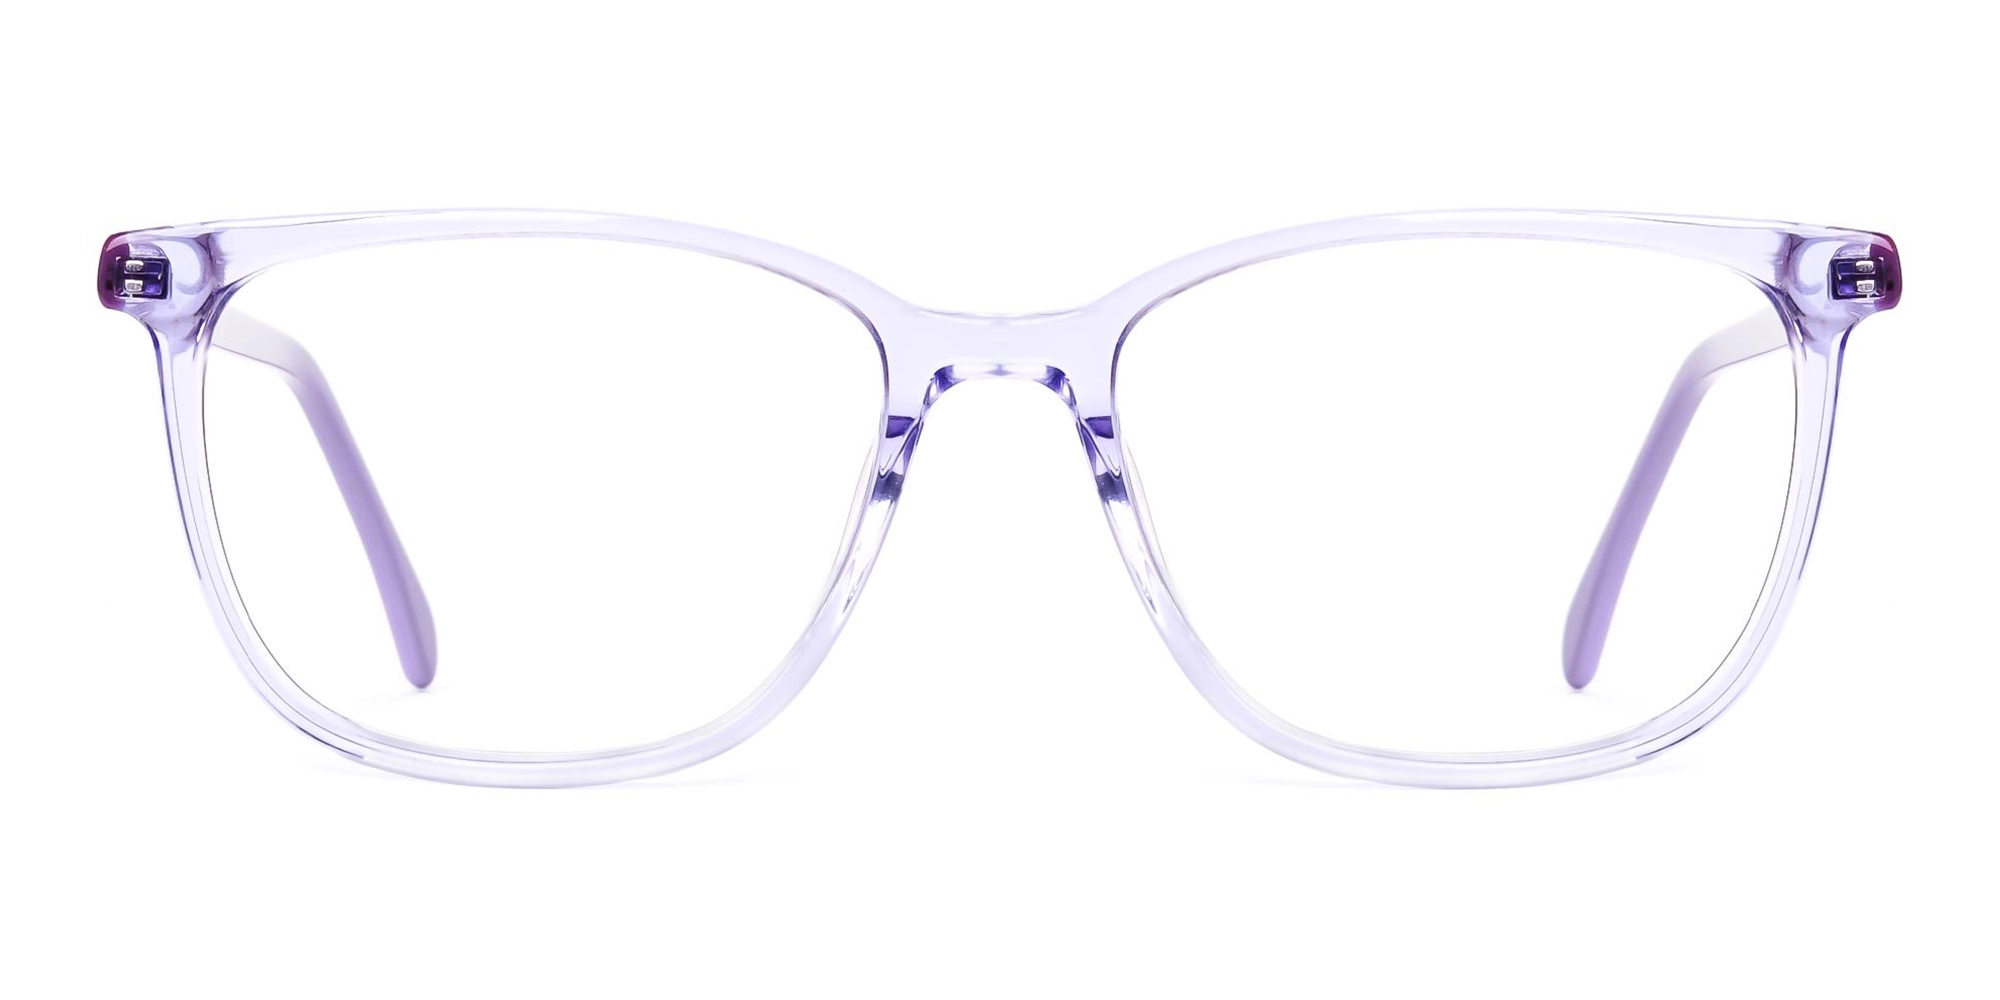 Purple-Square-and-Rectangular-Glasses-Frames-1